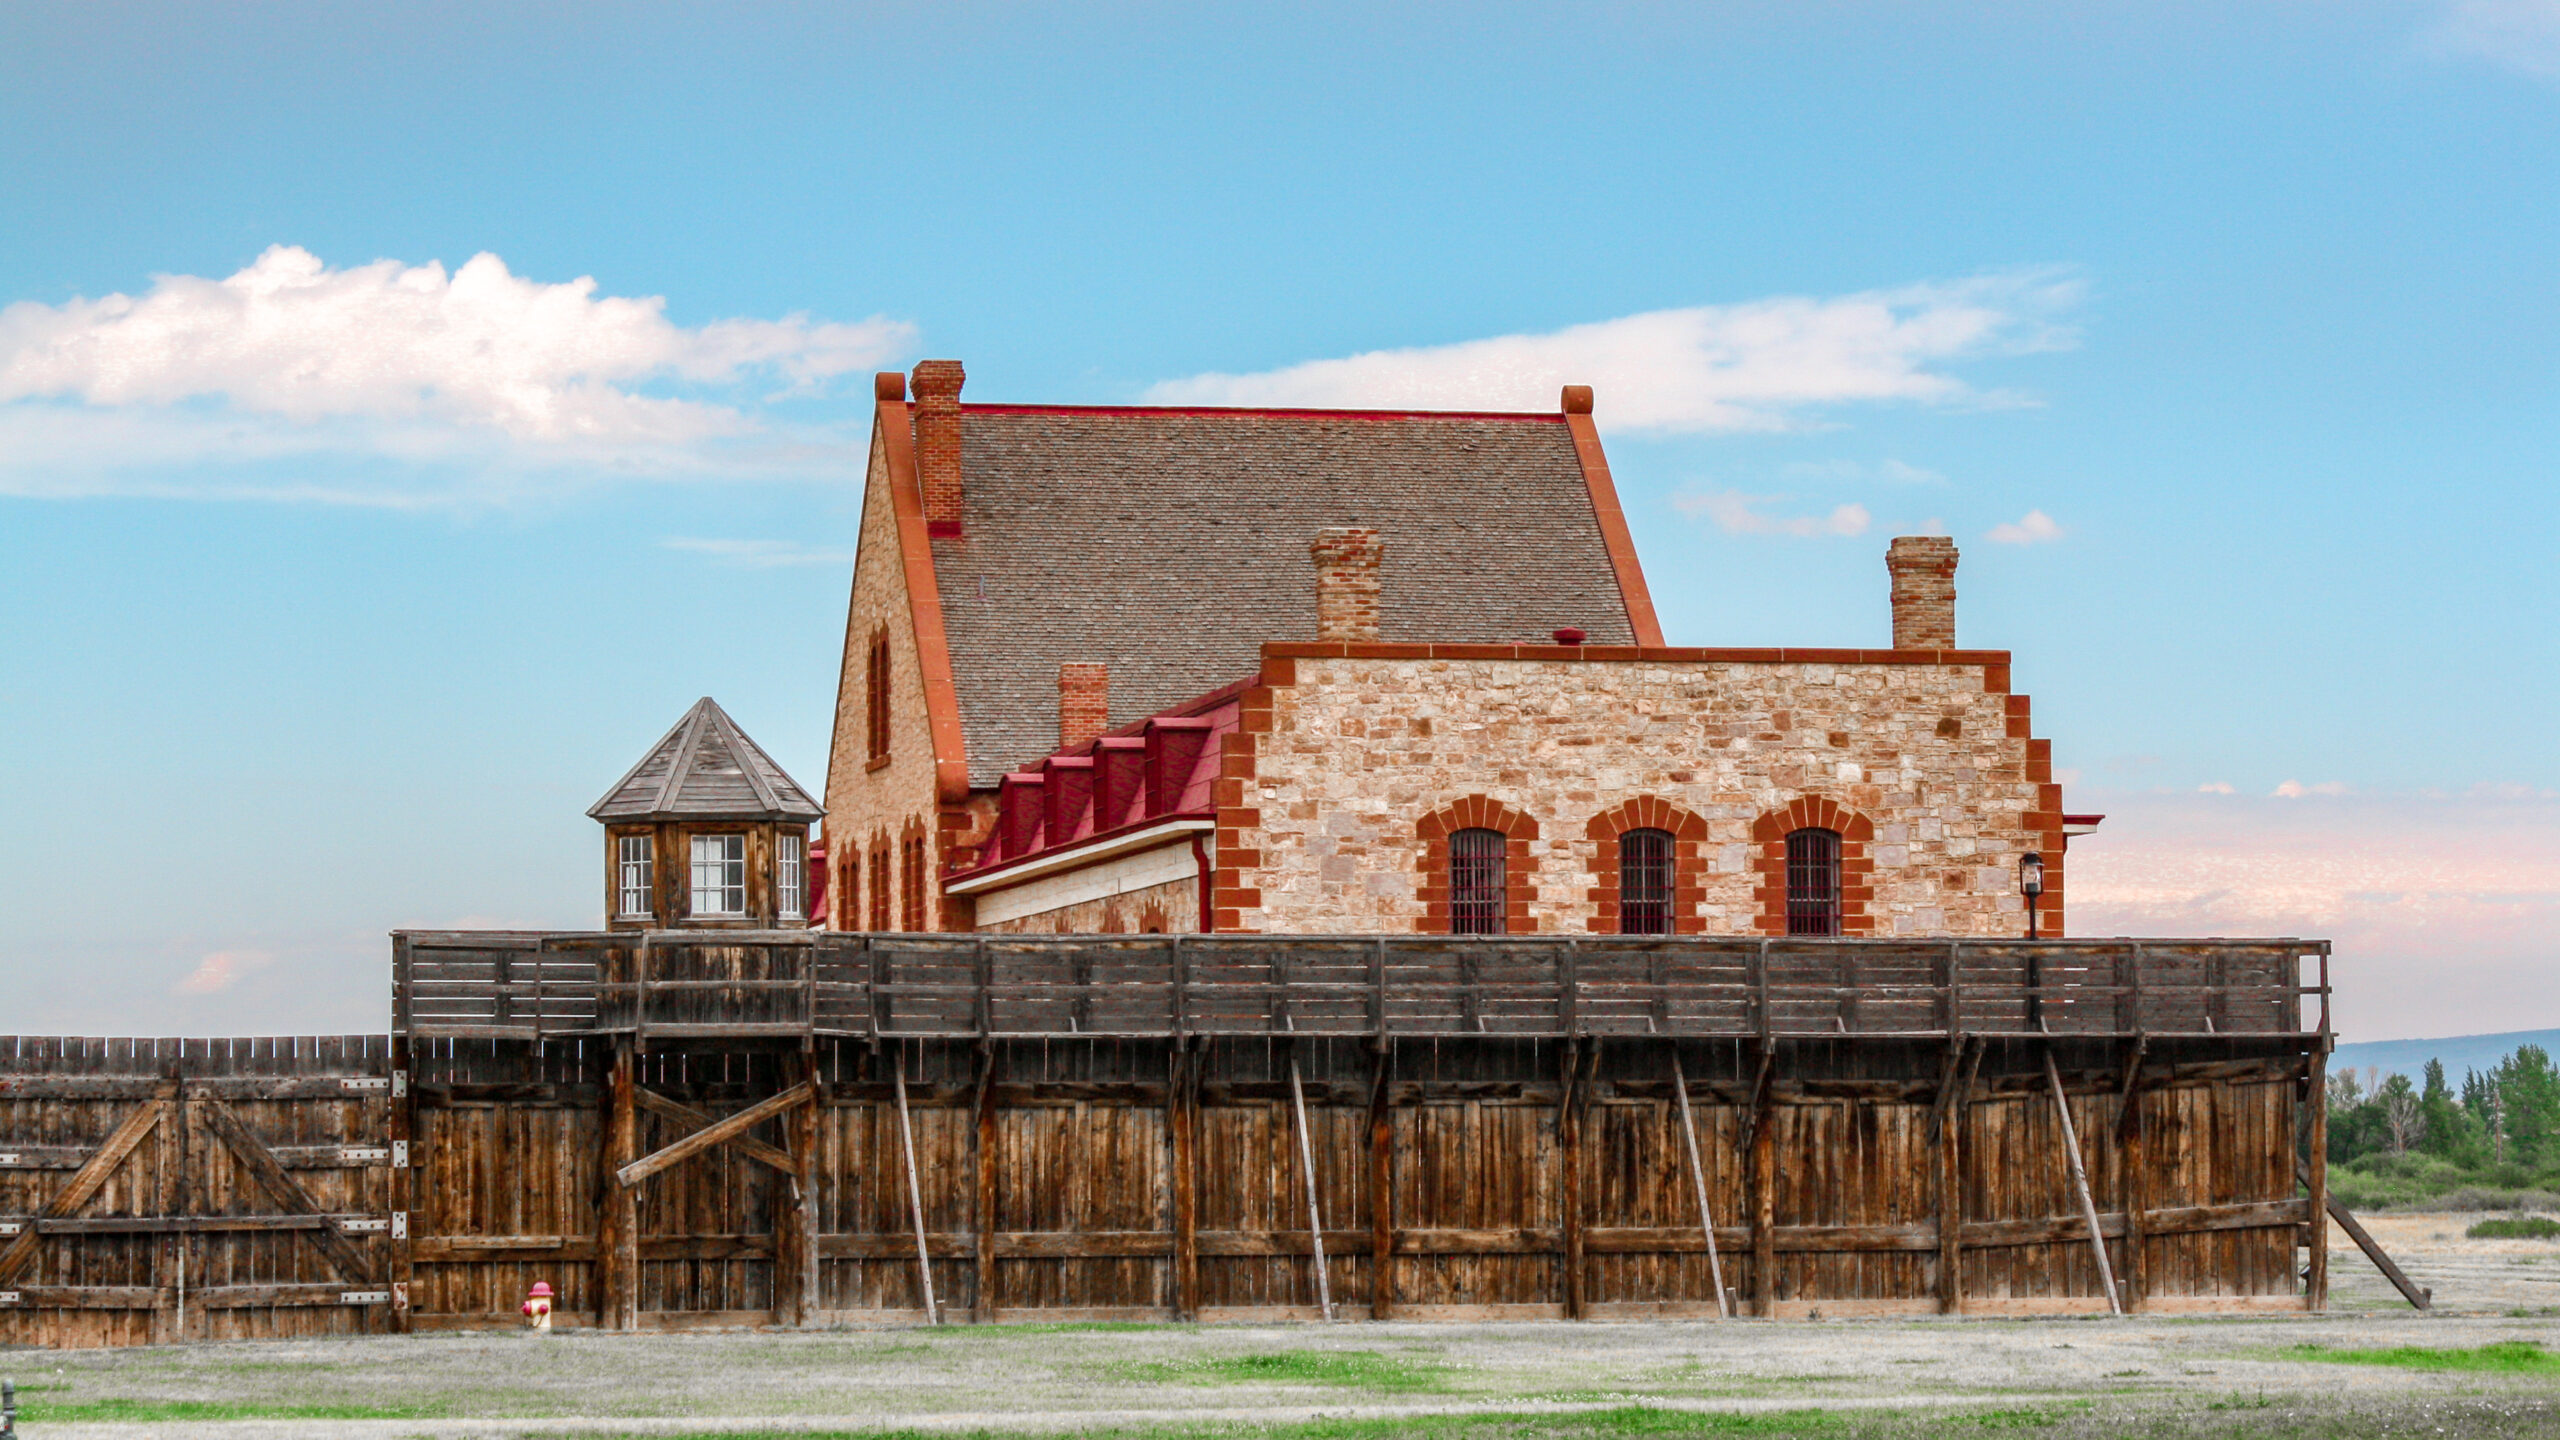 Historic Wyoming Territorial Prison in Laramie, Wyoming. creative commons license

